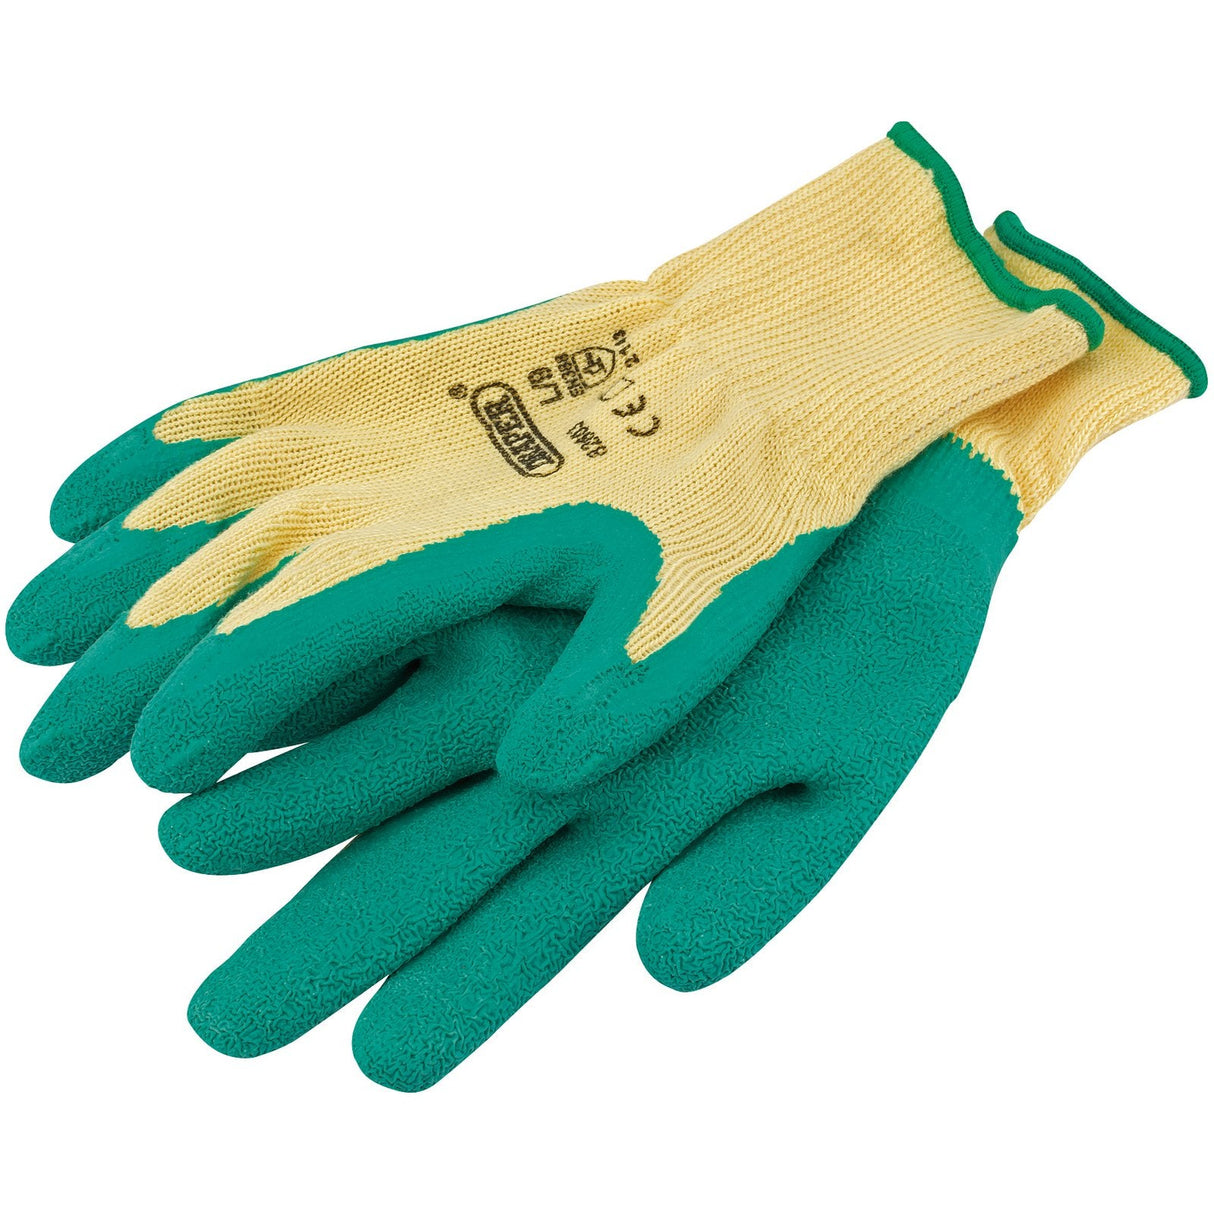 Draper Heavy Duty Latex Coated Work Gloves, Large, Green - HDLGA/B - Farming Parts